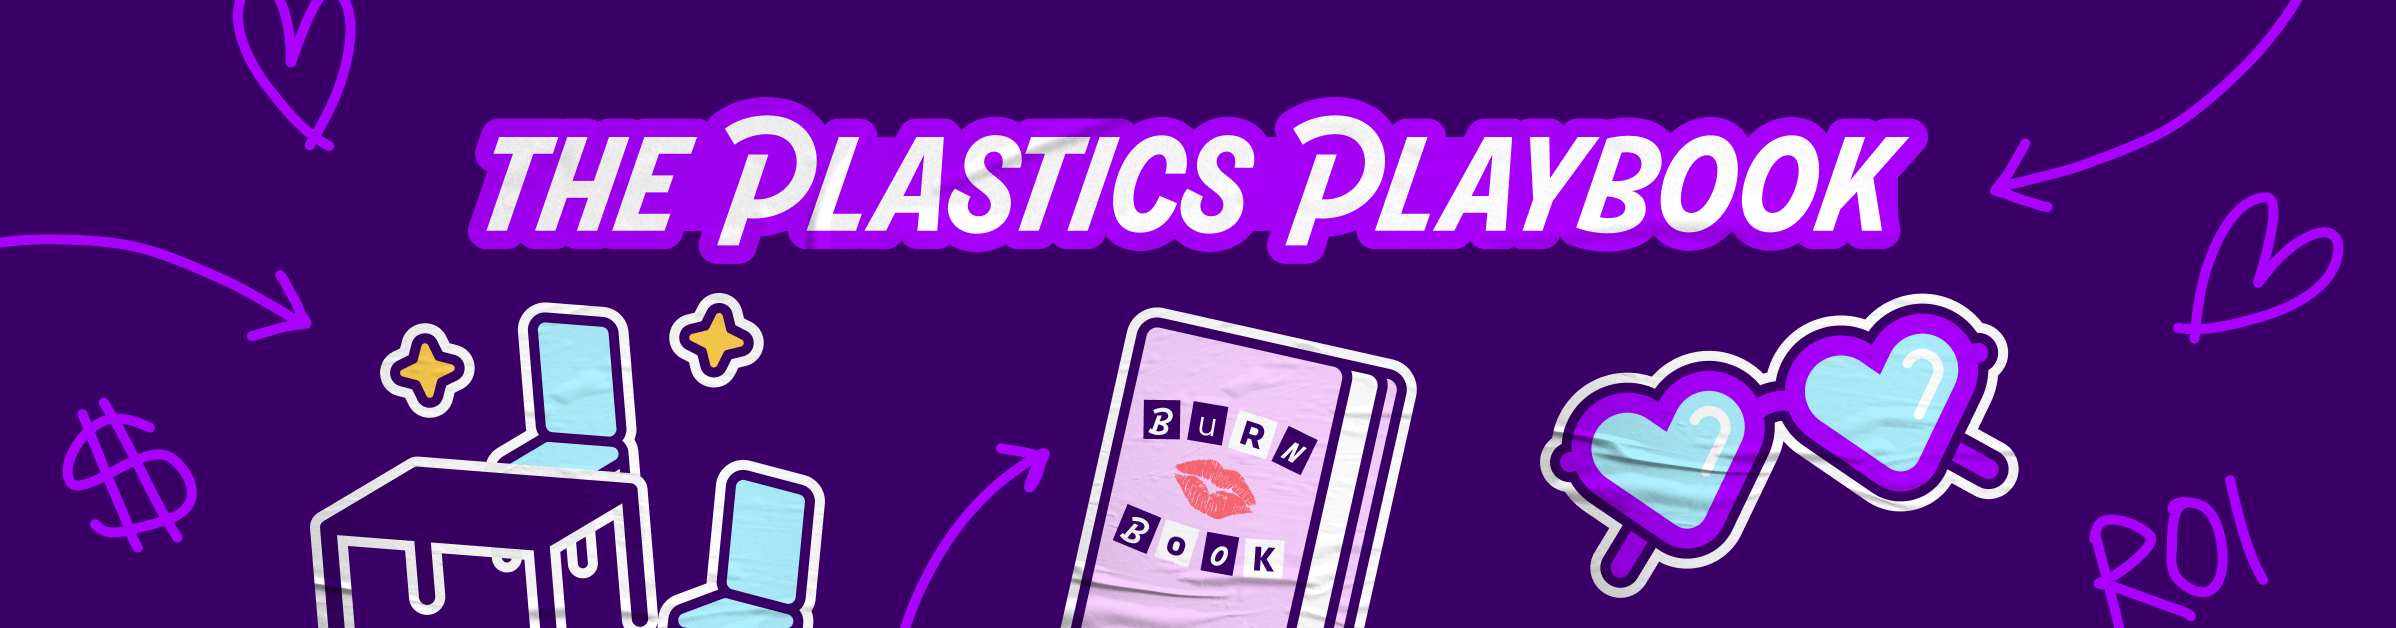 The Plastics Playbook header